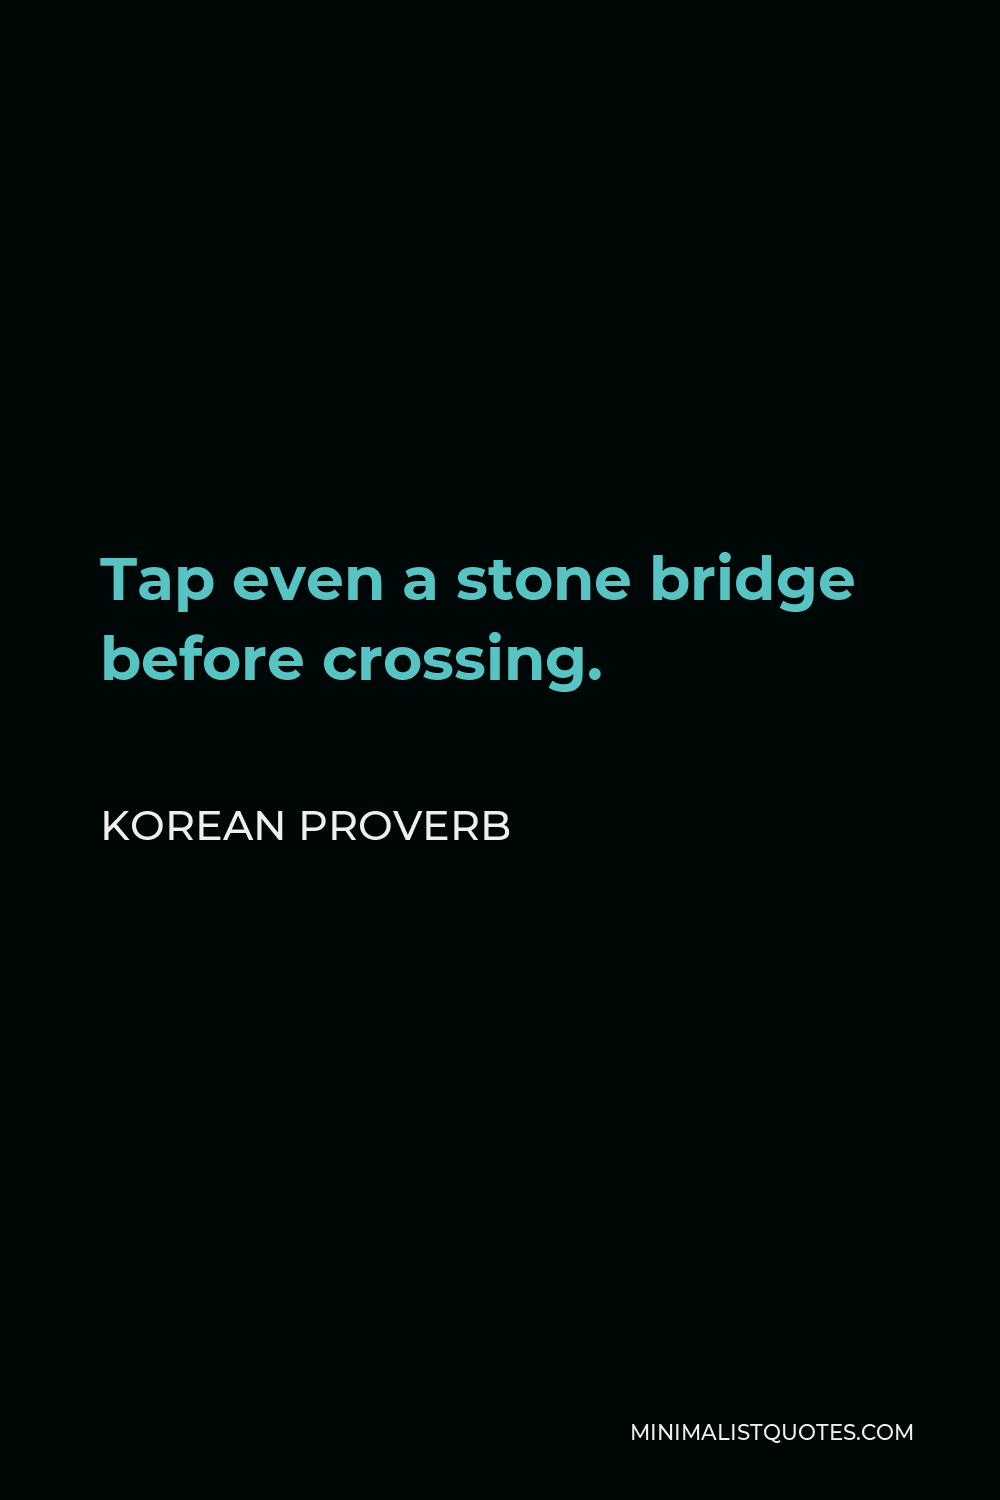 Korean Proverb Quote - Tap even a stone bridge before crossing.